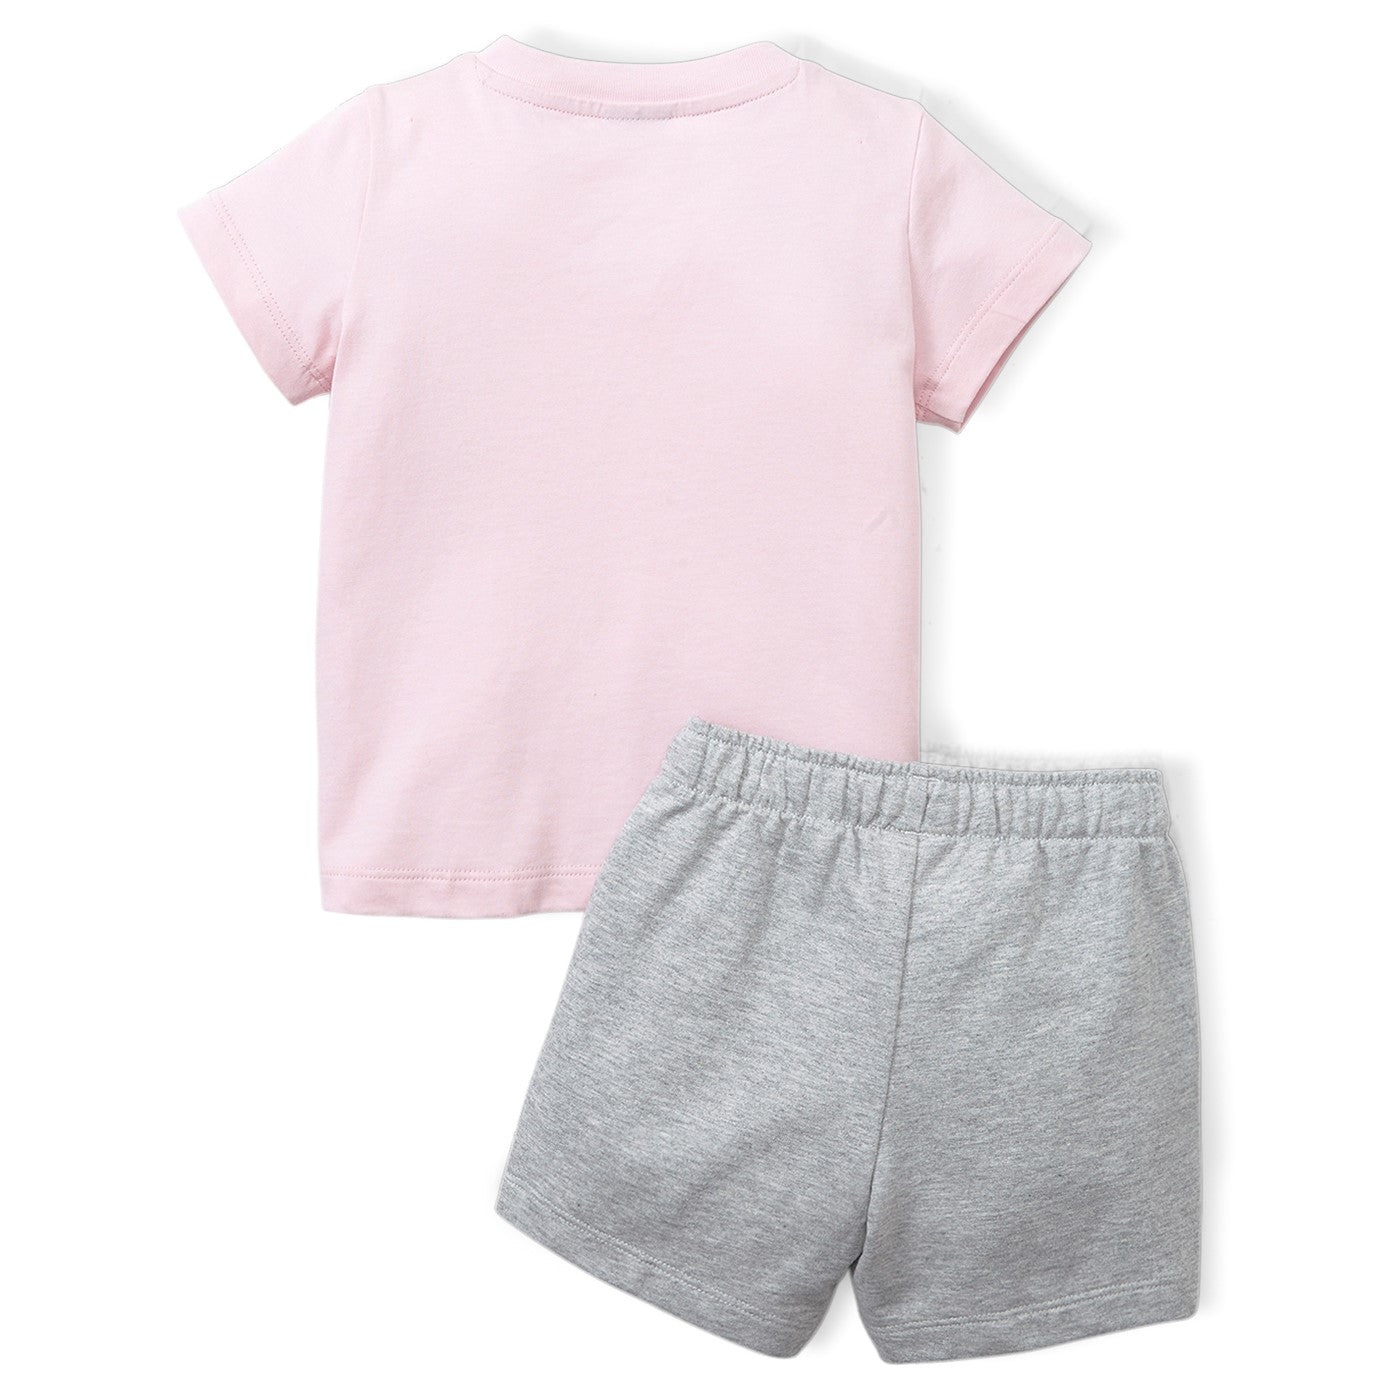 Puma completino da infant Minicats Tee &amp; Shorts Set 845839-16 chalk pink